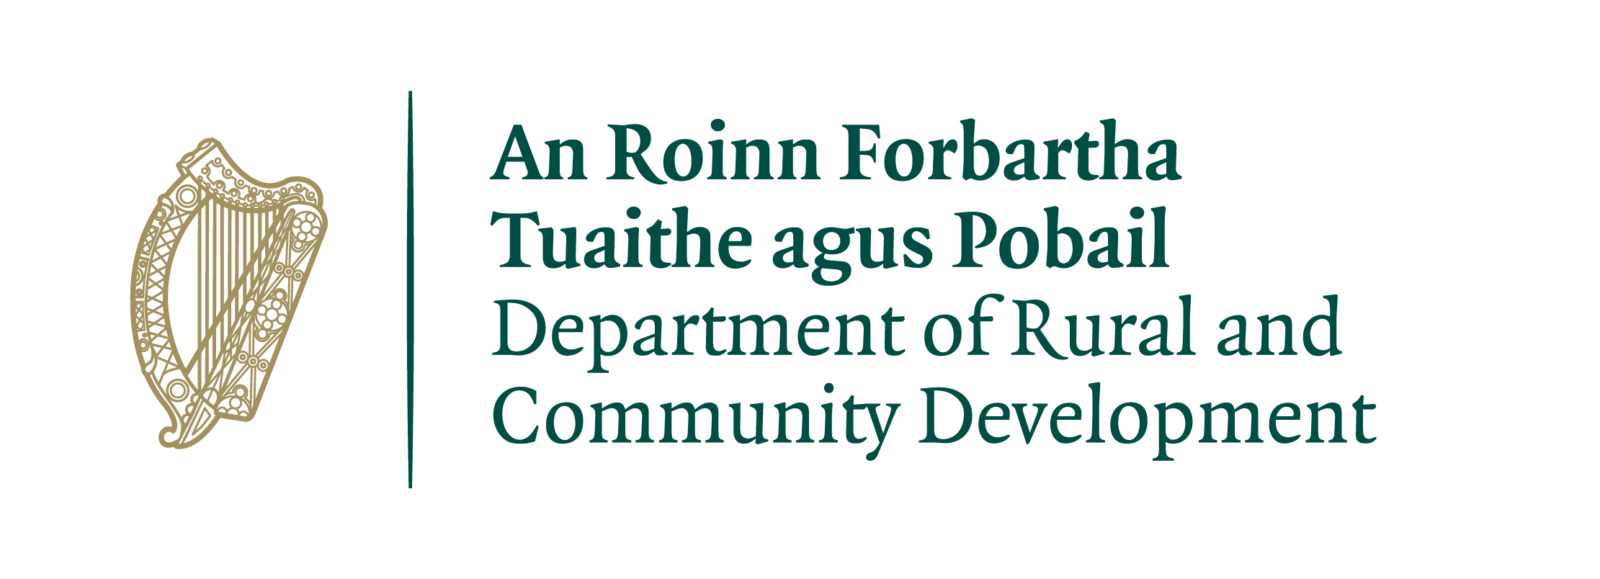 DRCD-govt-of-ireland-logo-2018